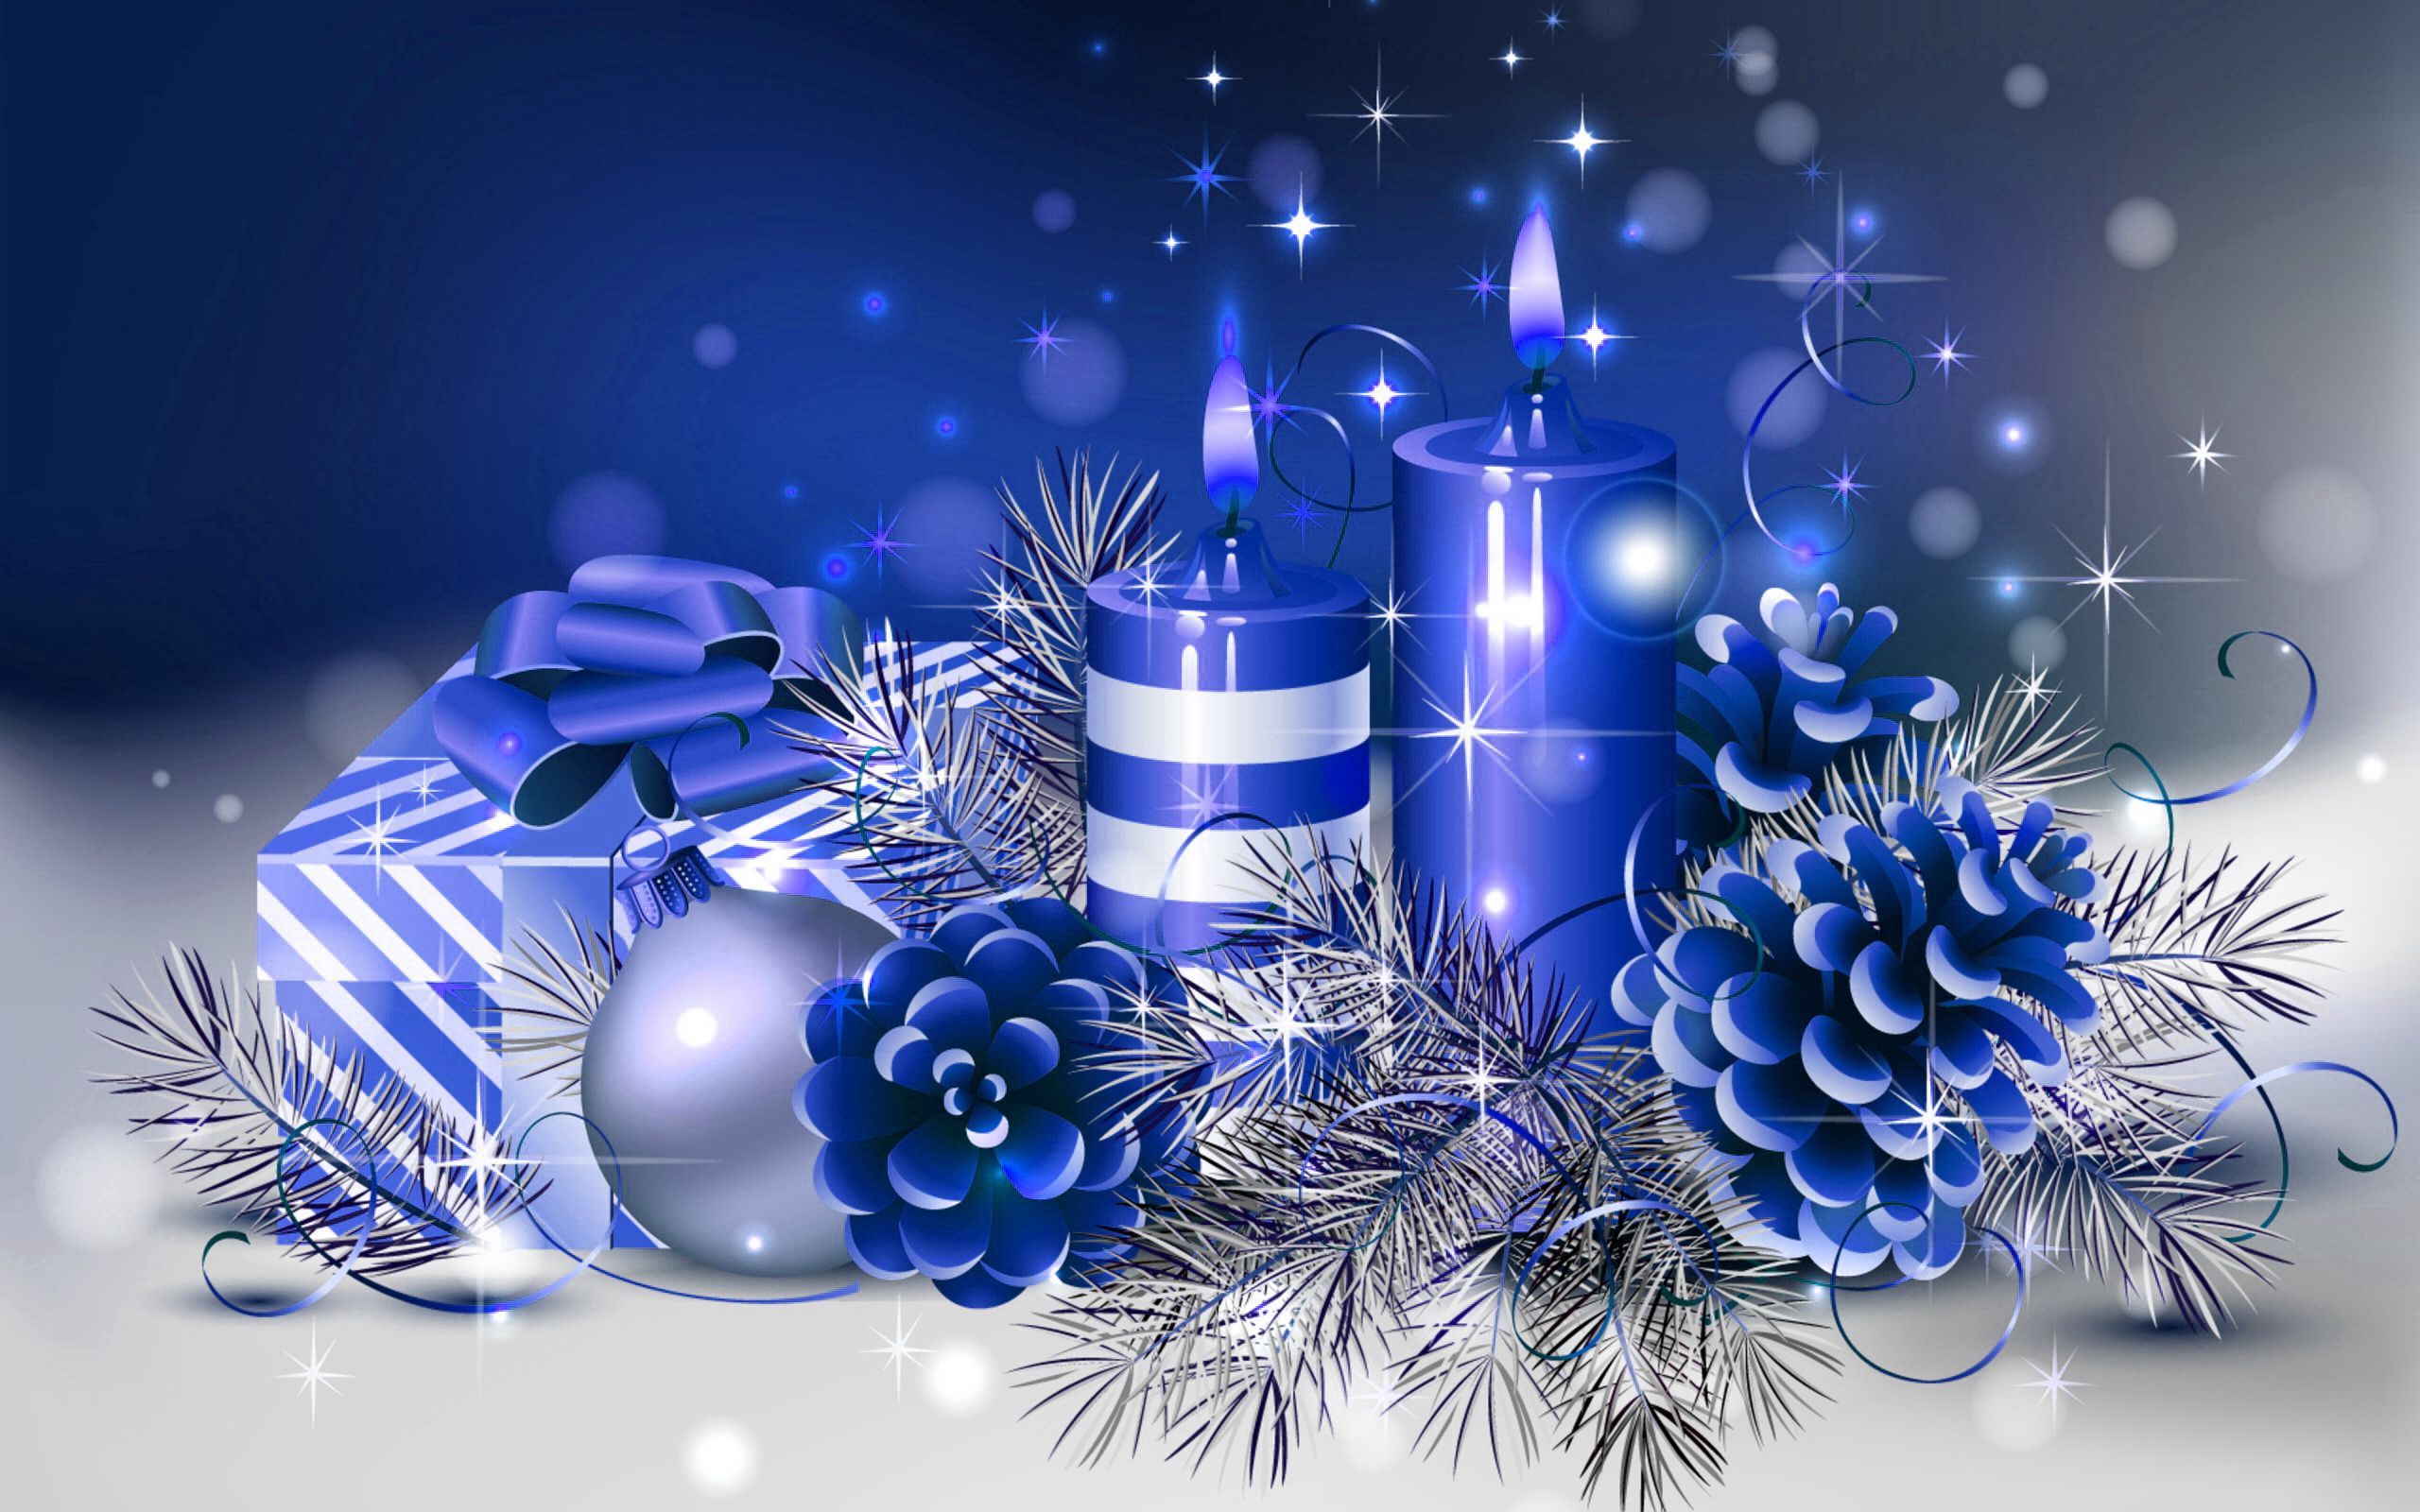 Merry Christmas tree free download wallpaper 2015. HD Wallpaper, HD Image, Art Photo. Animated christmas wallpaper, Christmas desktop, Christmas wallpaper free